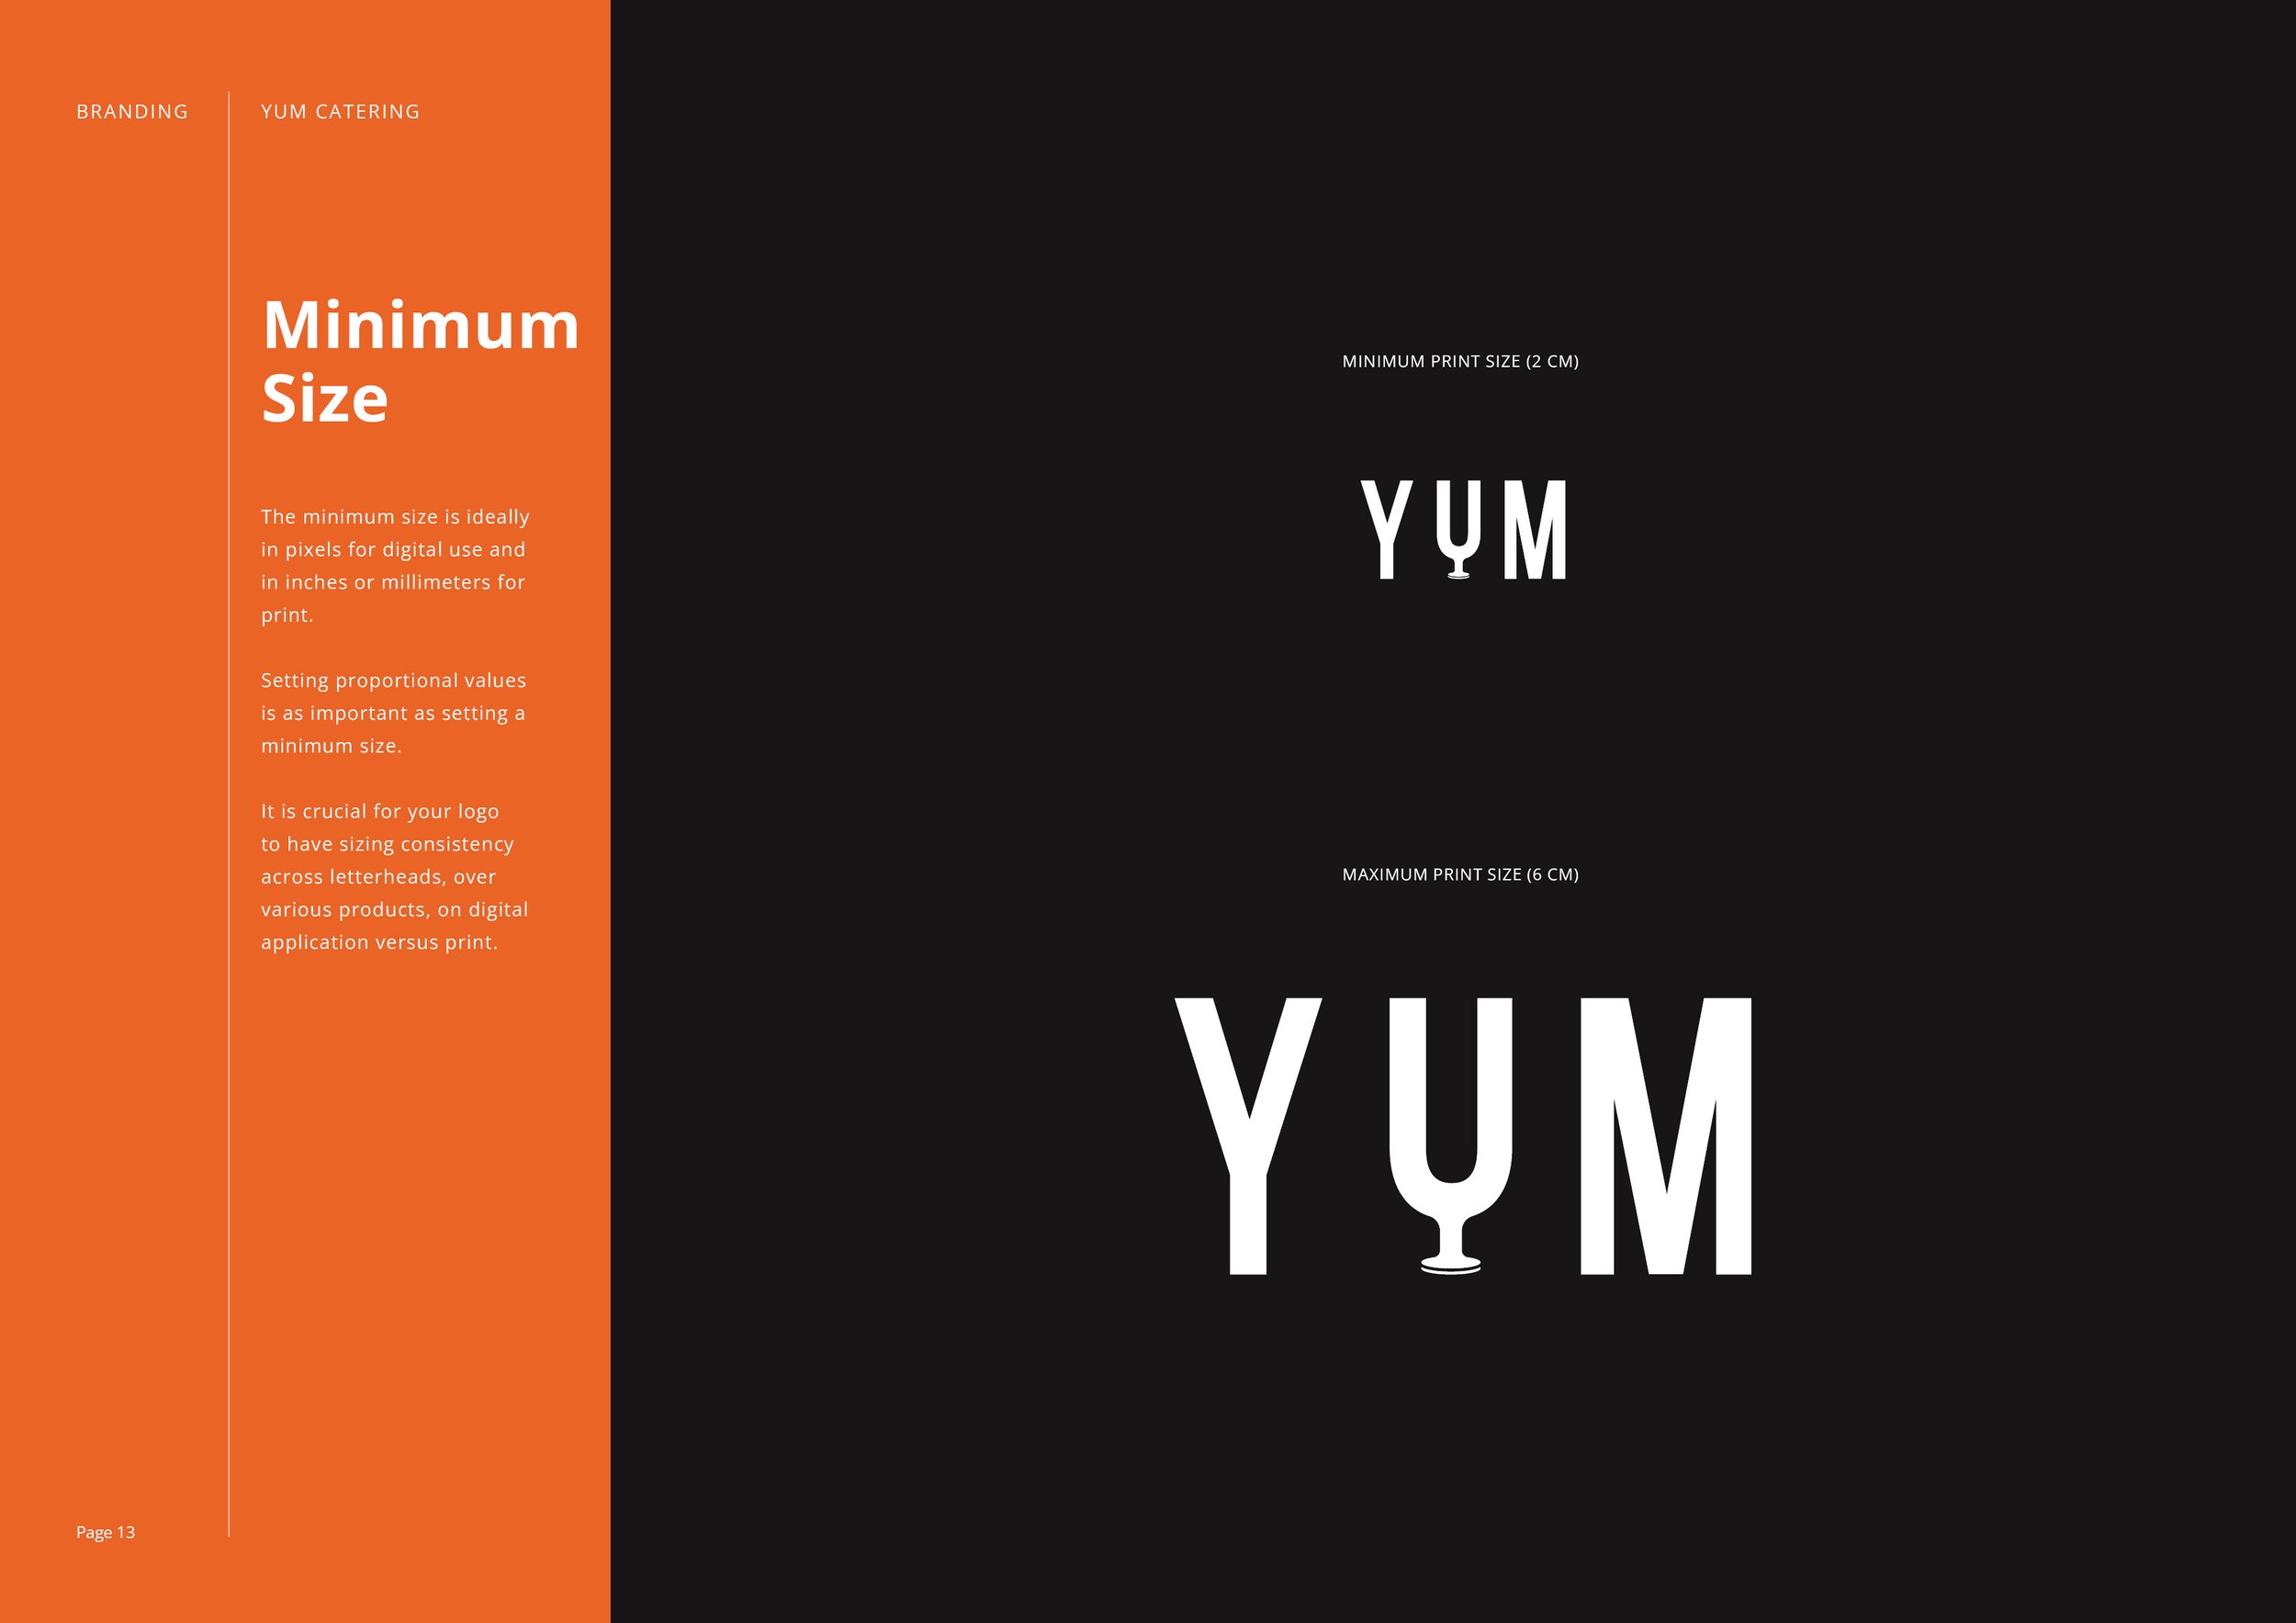 Yum Catering Brand and Logo Presentation13.jpg